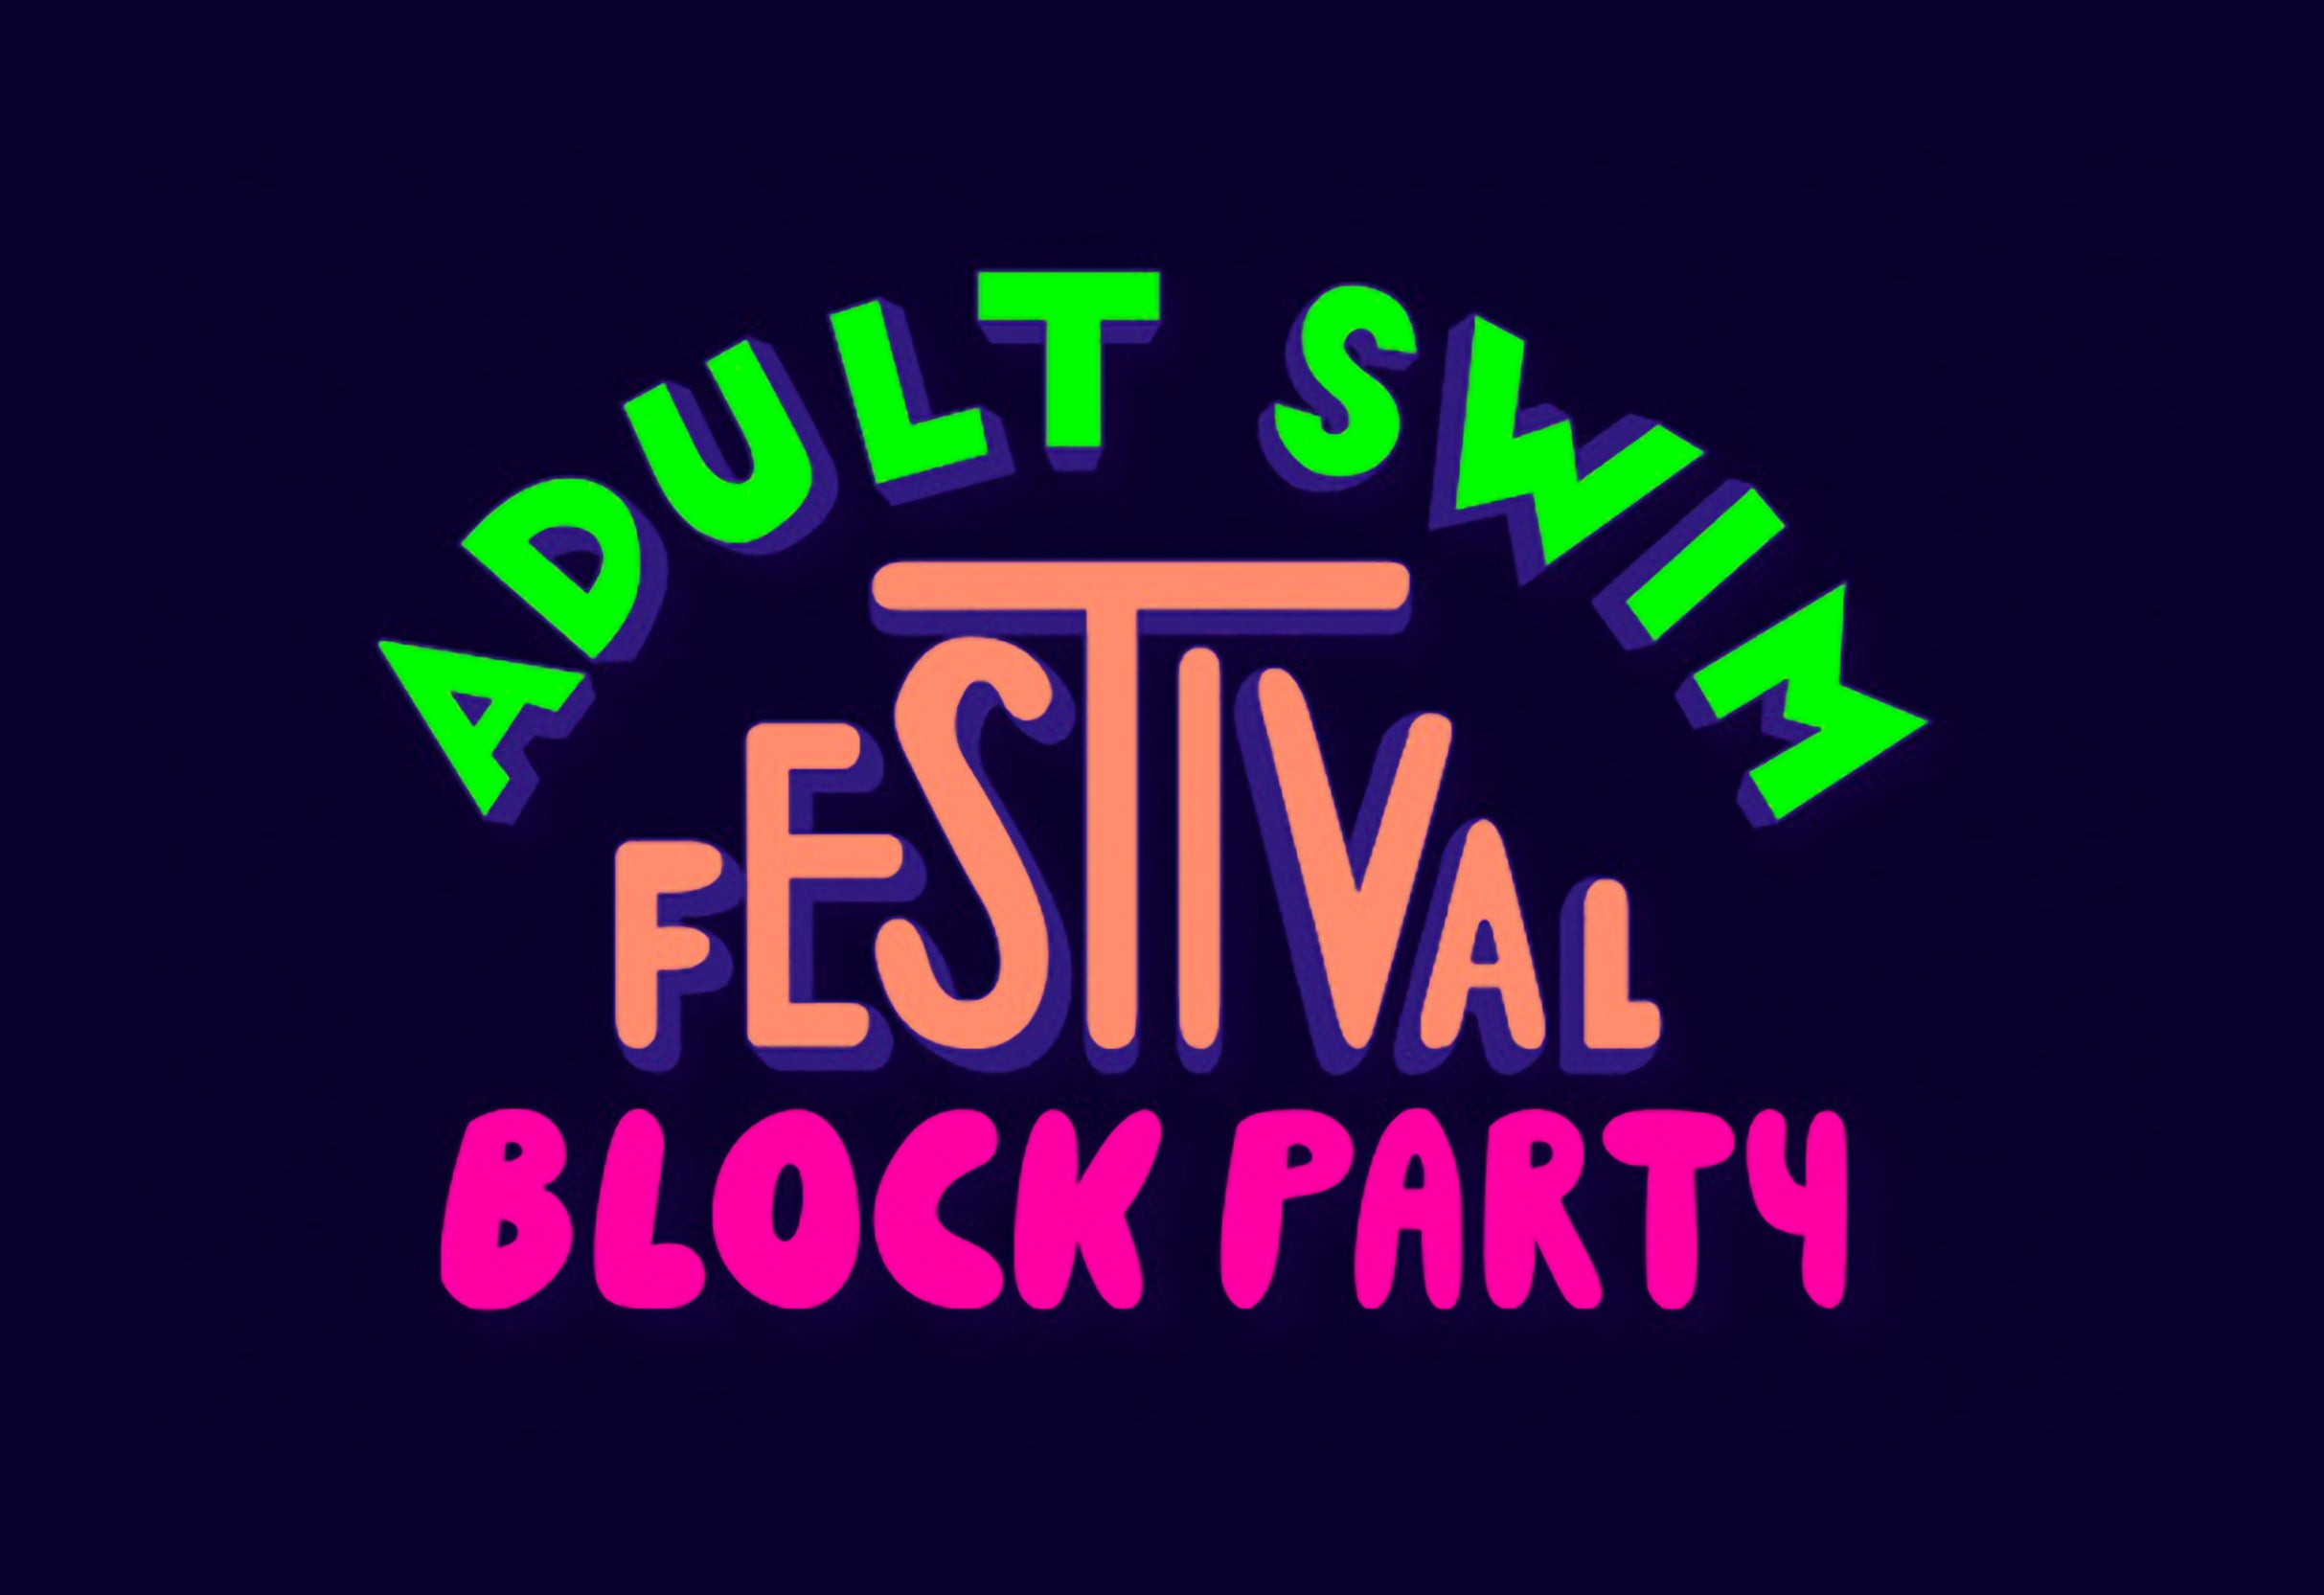 Adult Swim Festival Block Party Sunday Passes in Philadelphia promo photo for Radio presale offer code